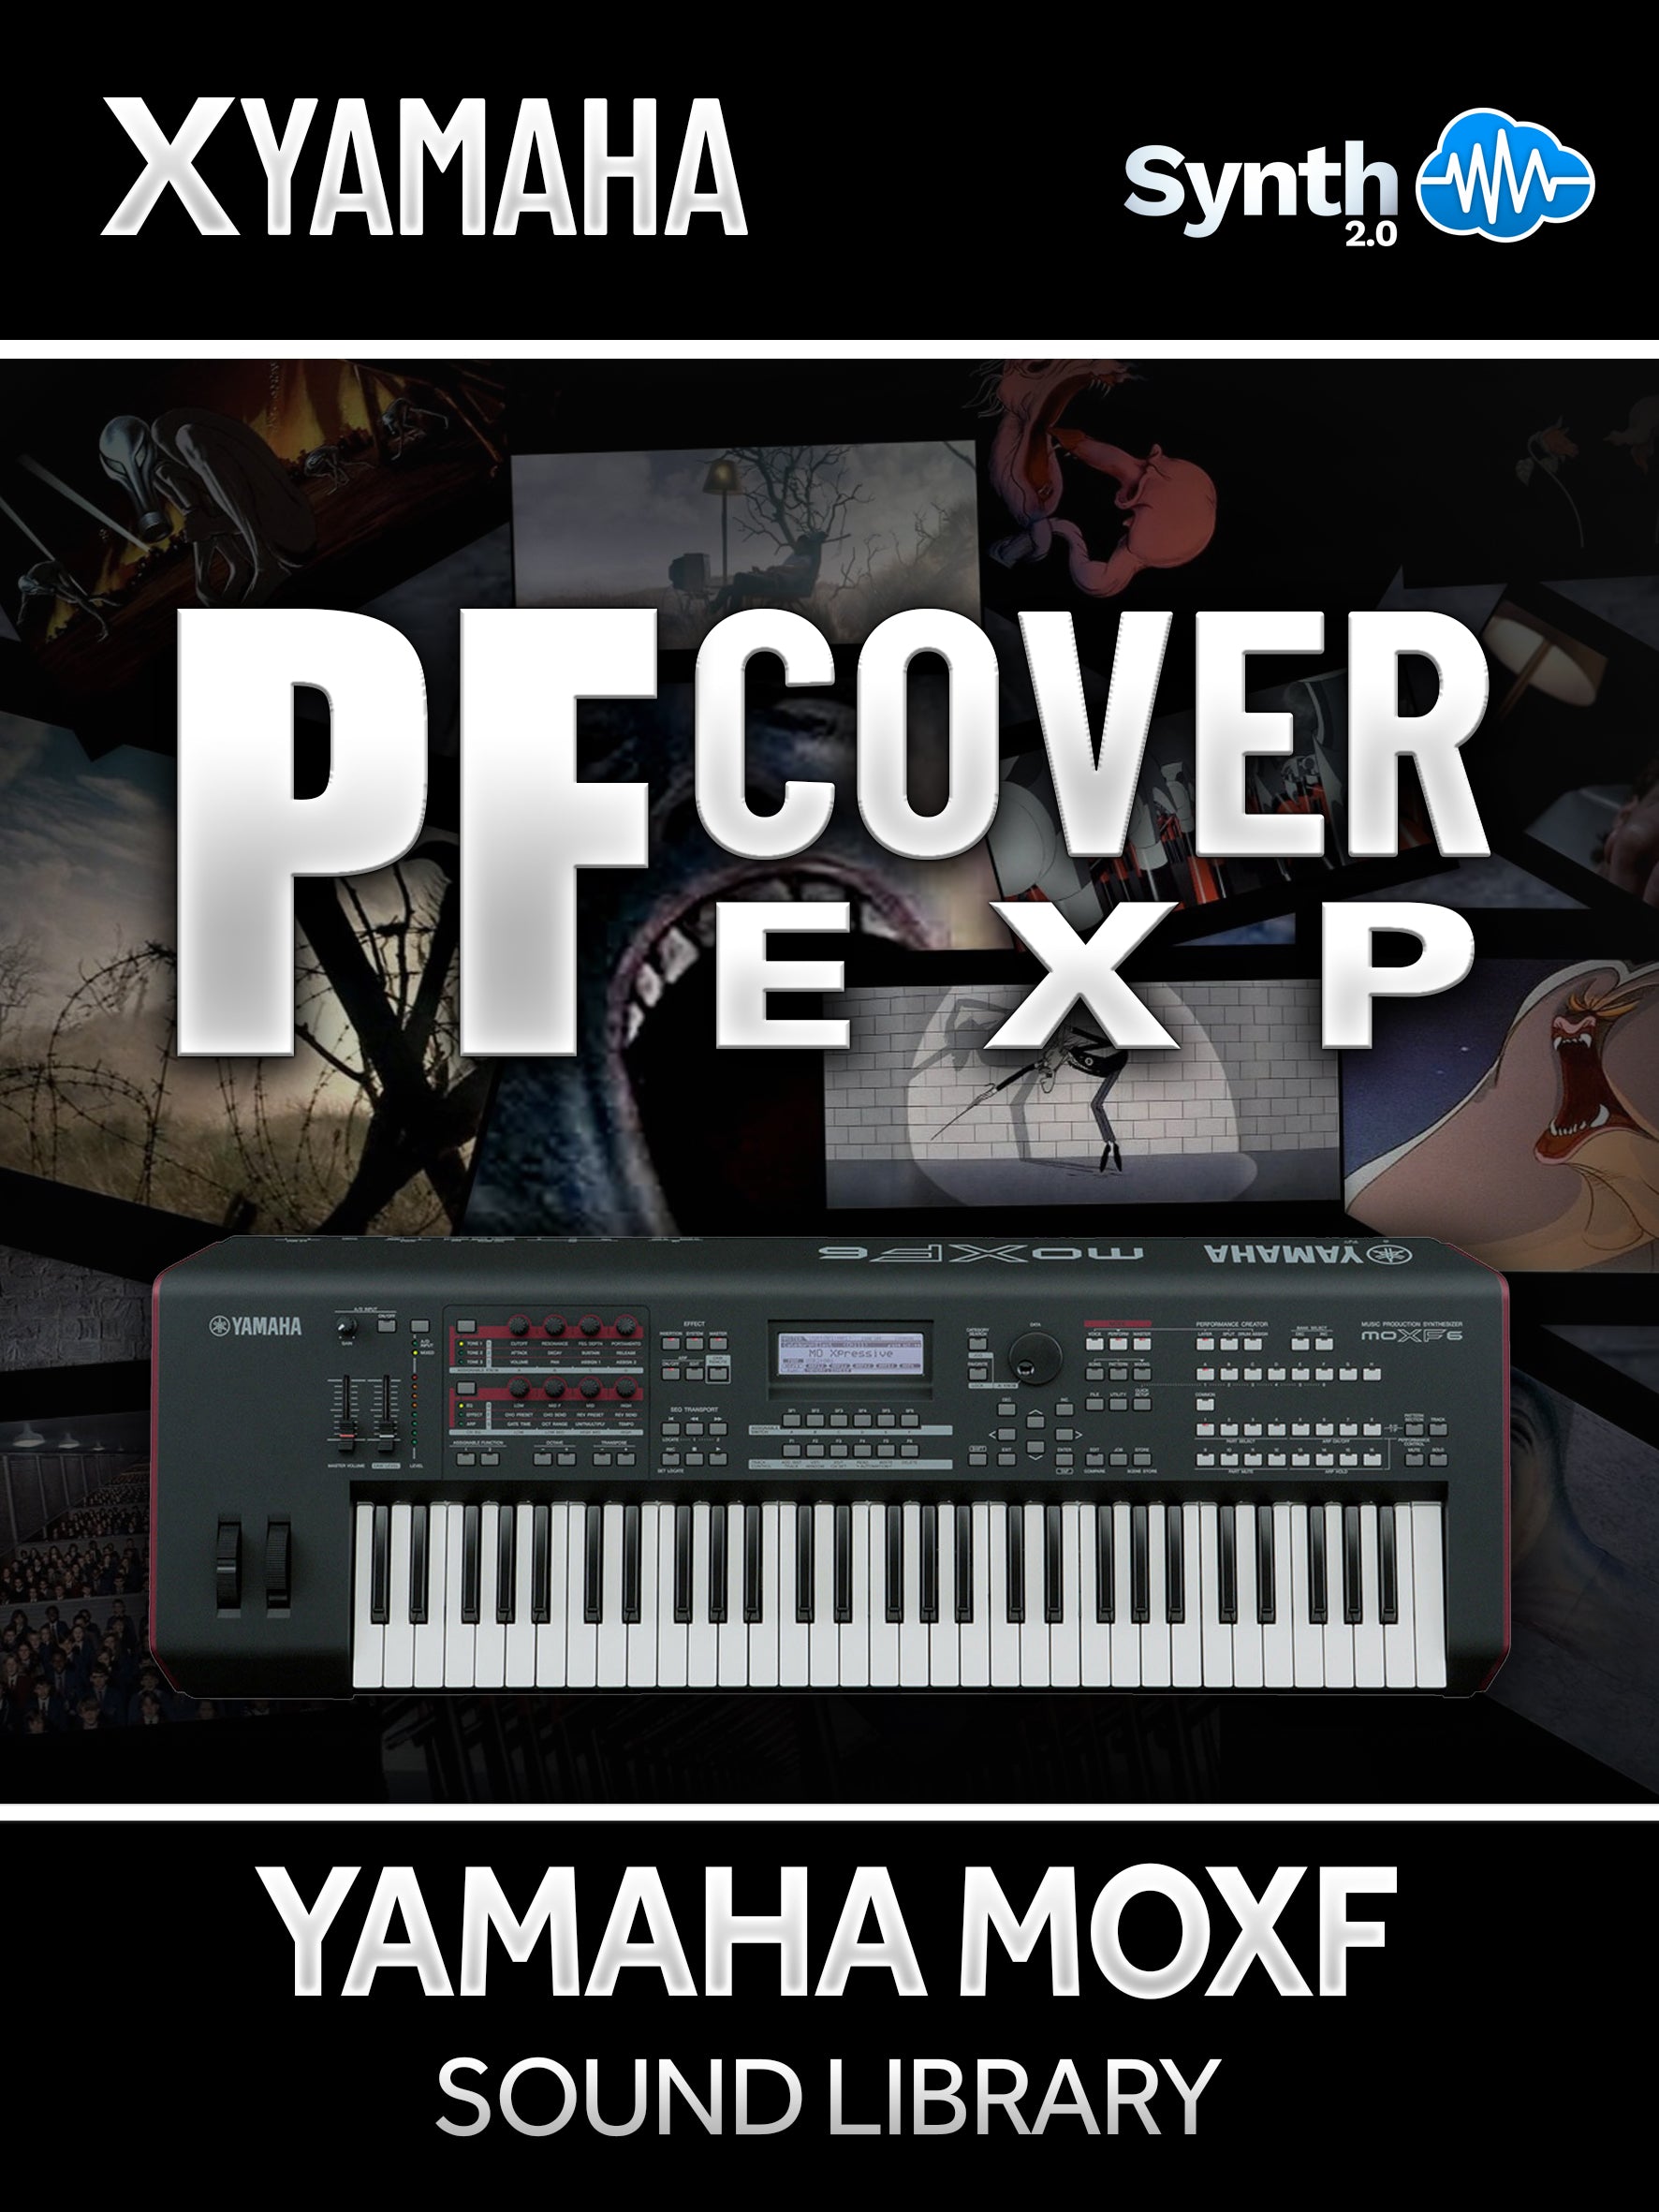 LDX122 - PF Cover EXP - Yamaha MOXF ( 42 presets )